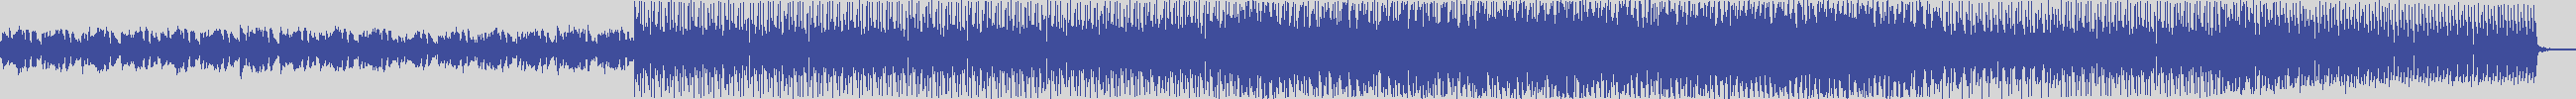 vitti_records [VIT011] Icn - Prime [Original Mix] audio wave form